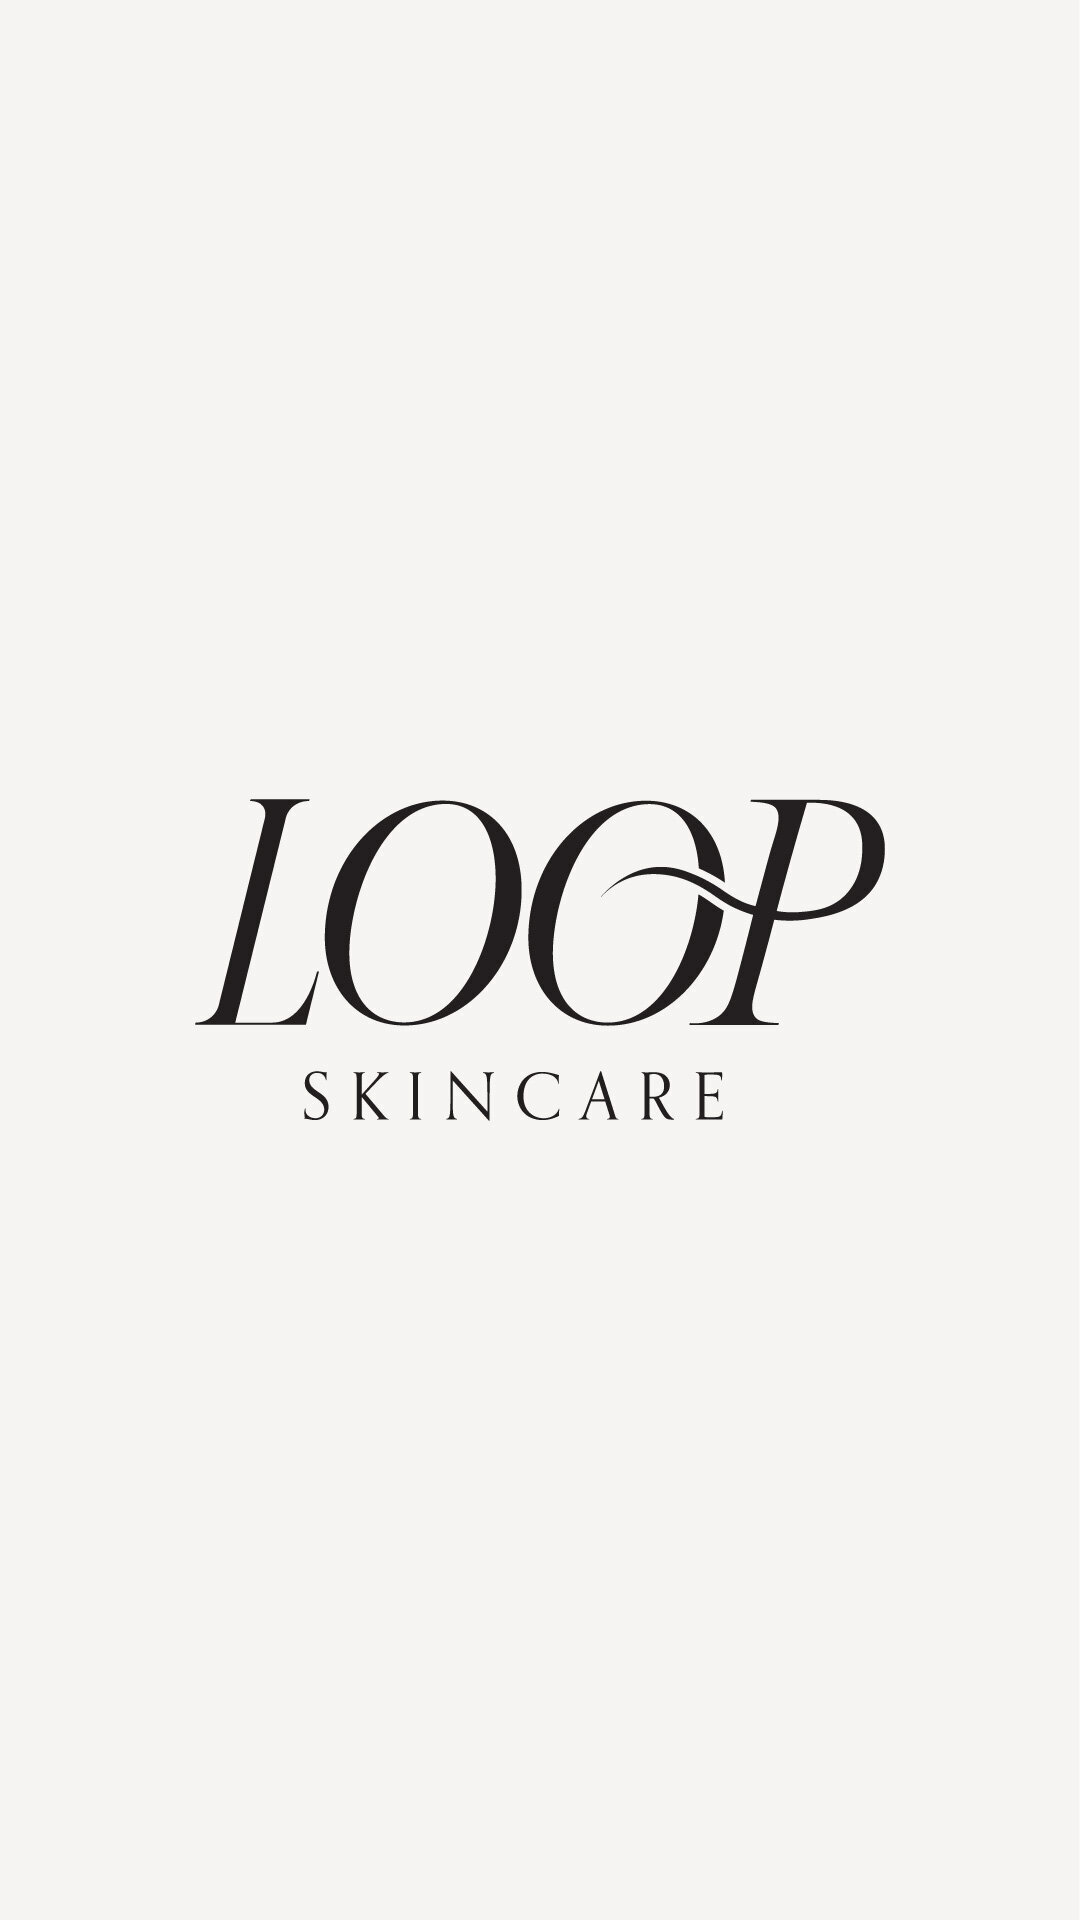 A mockup of the Loop Skincare logo